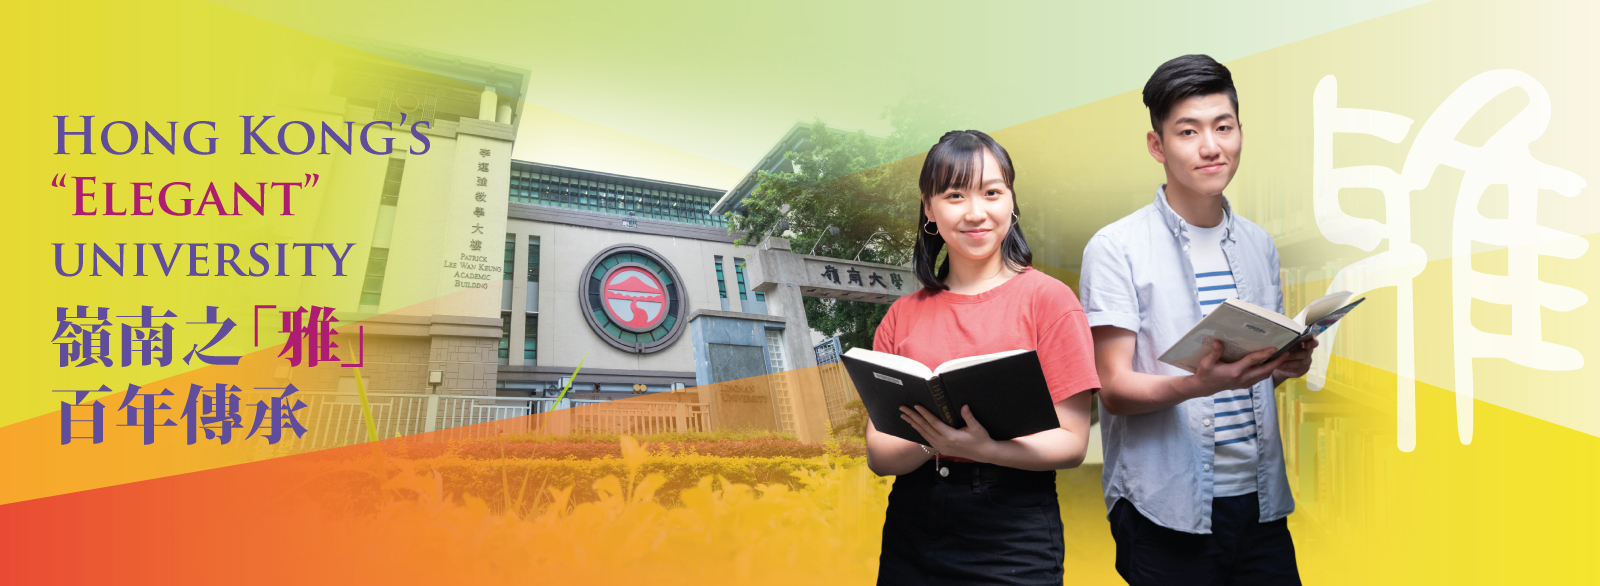 Hong Kong’s “elegant” university - 嶺南之「雅」 百年傳承